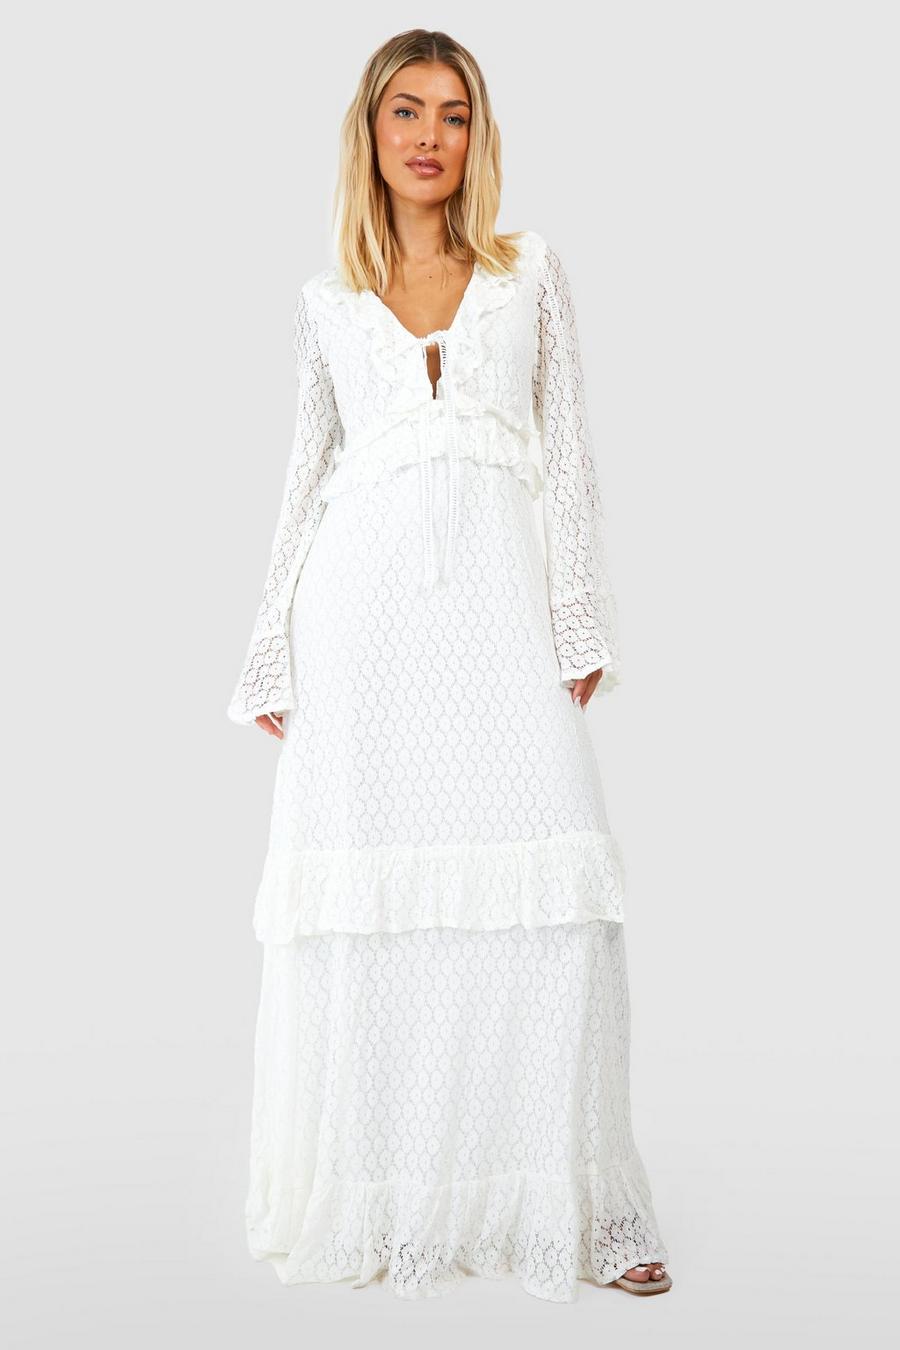 Stunning White Lace Dress - Midi Dresses